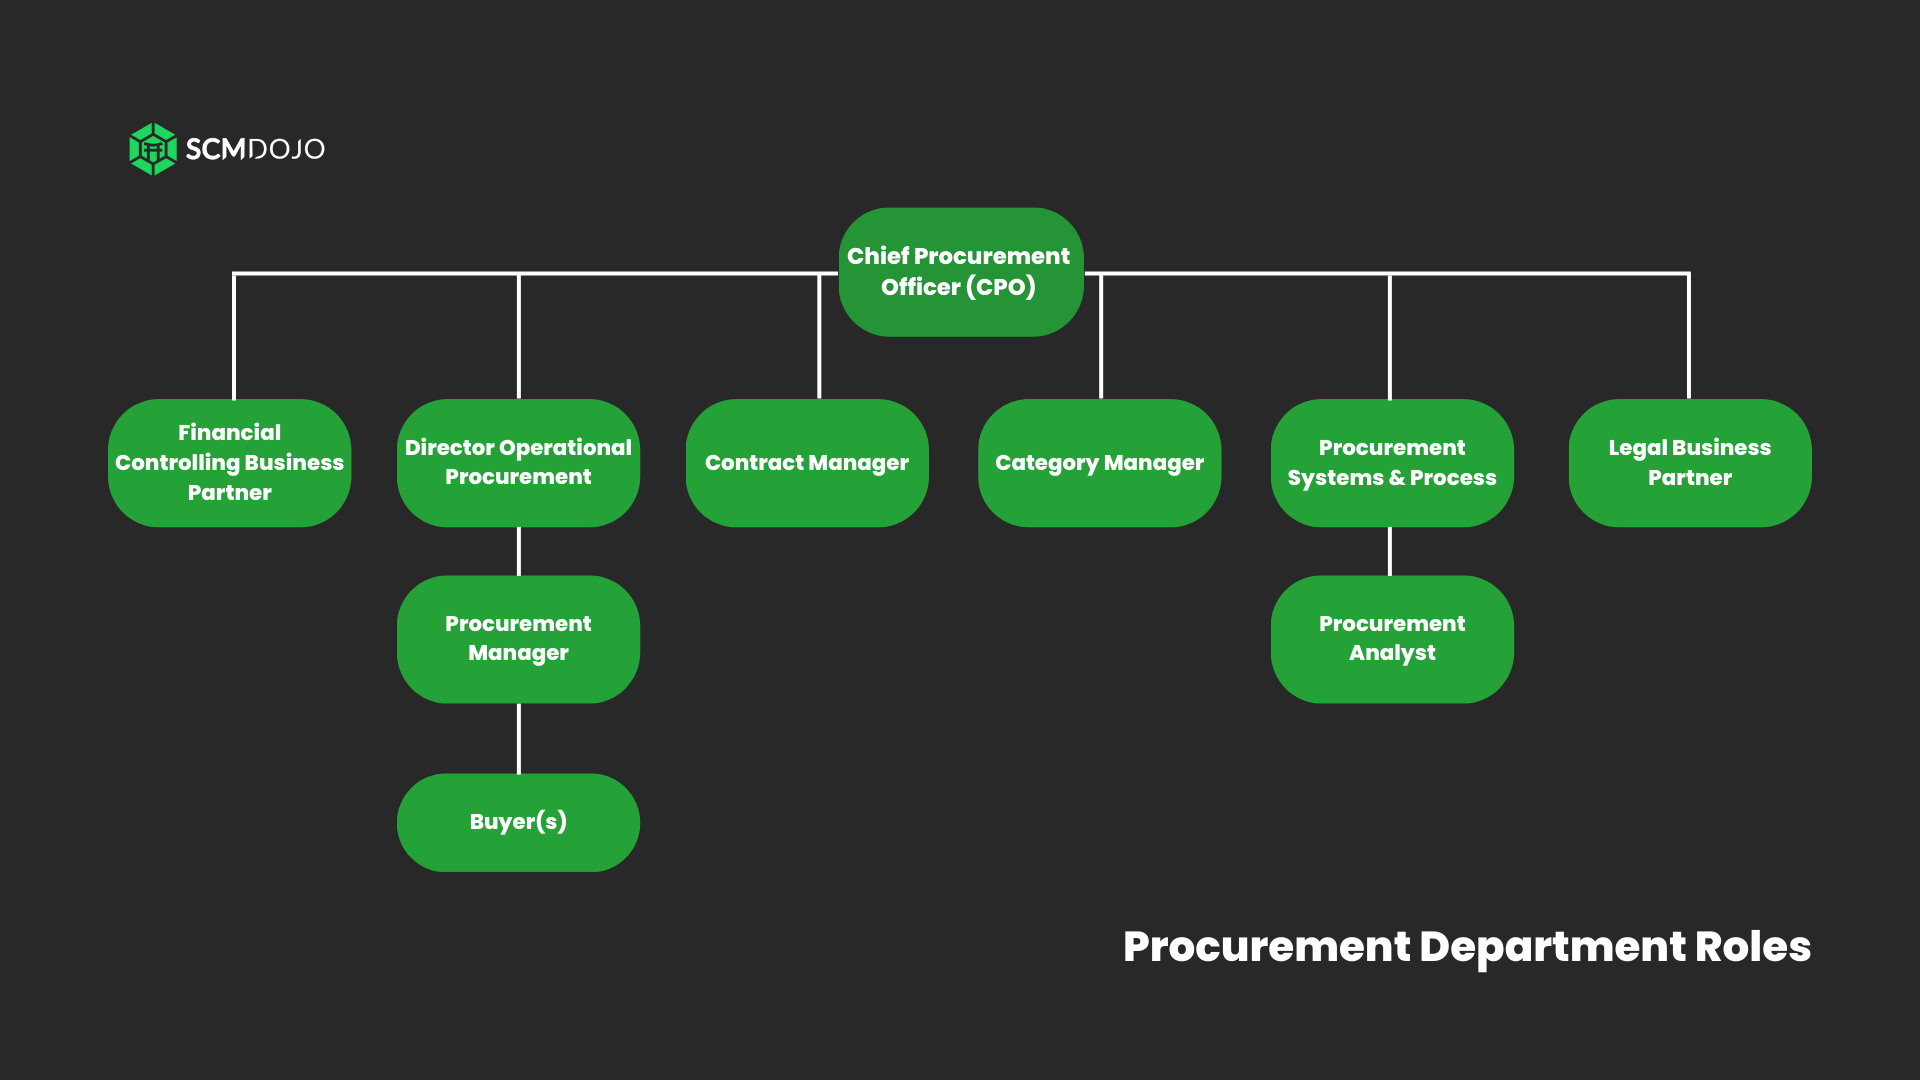 Procurement Department Roles and Responsibilities